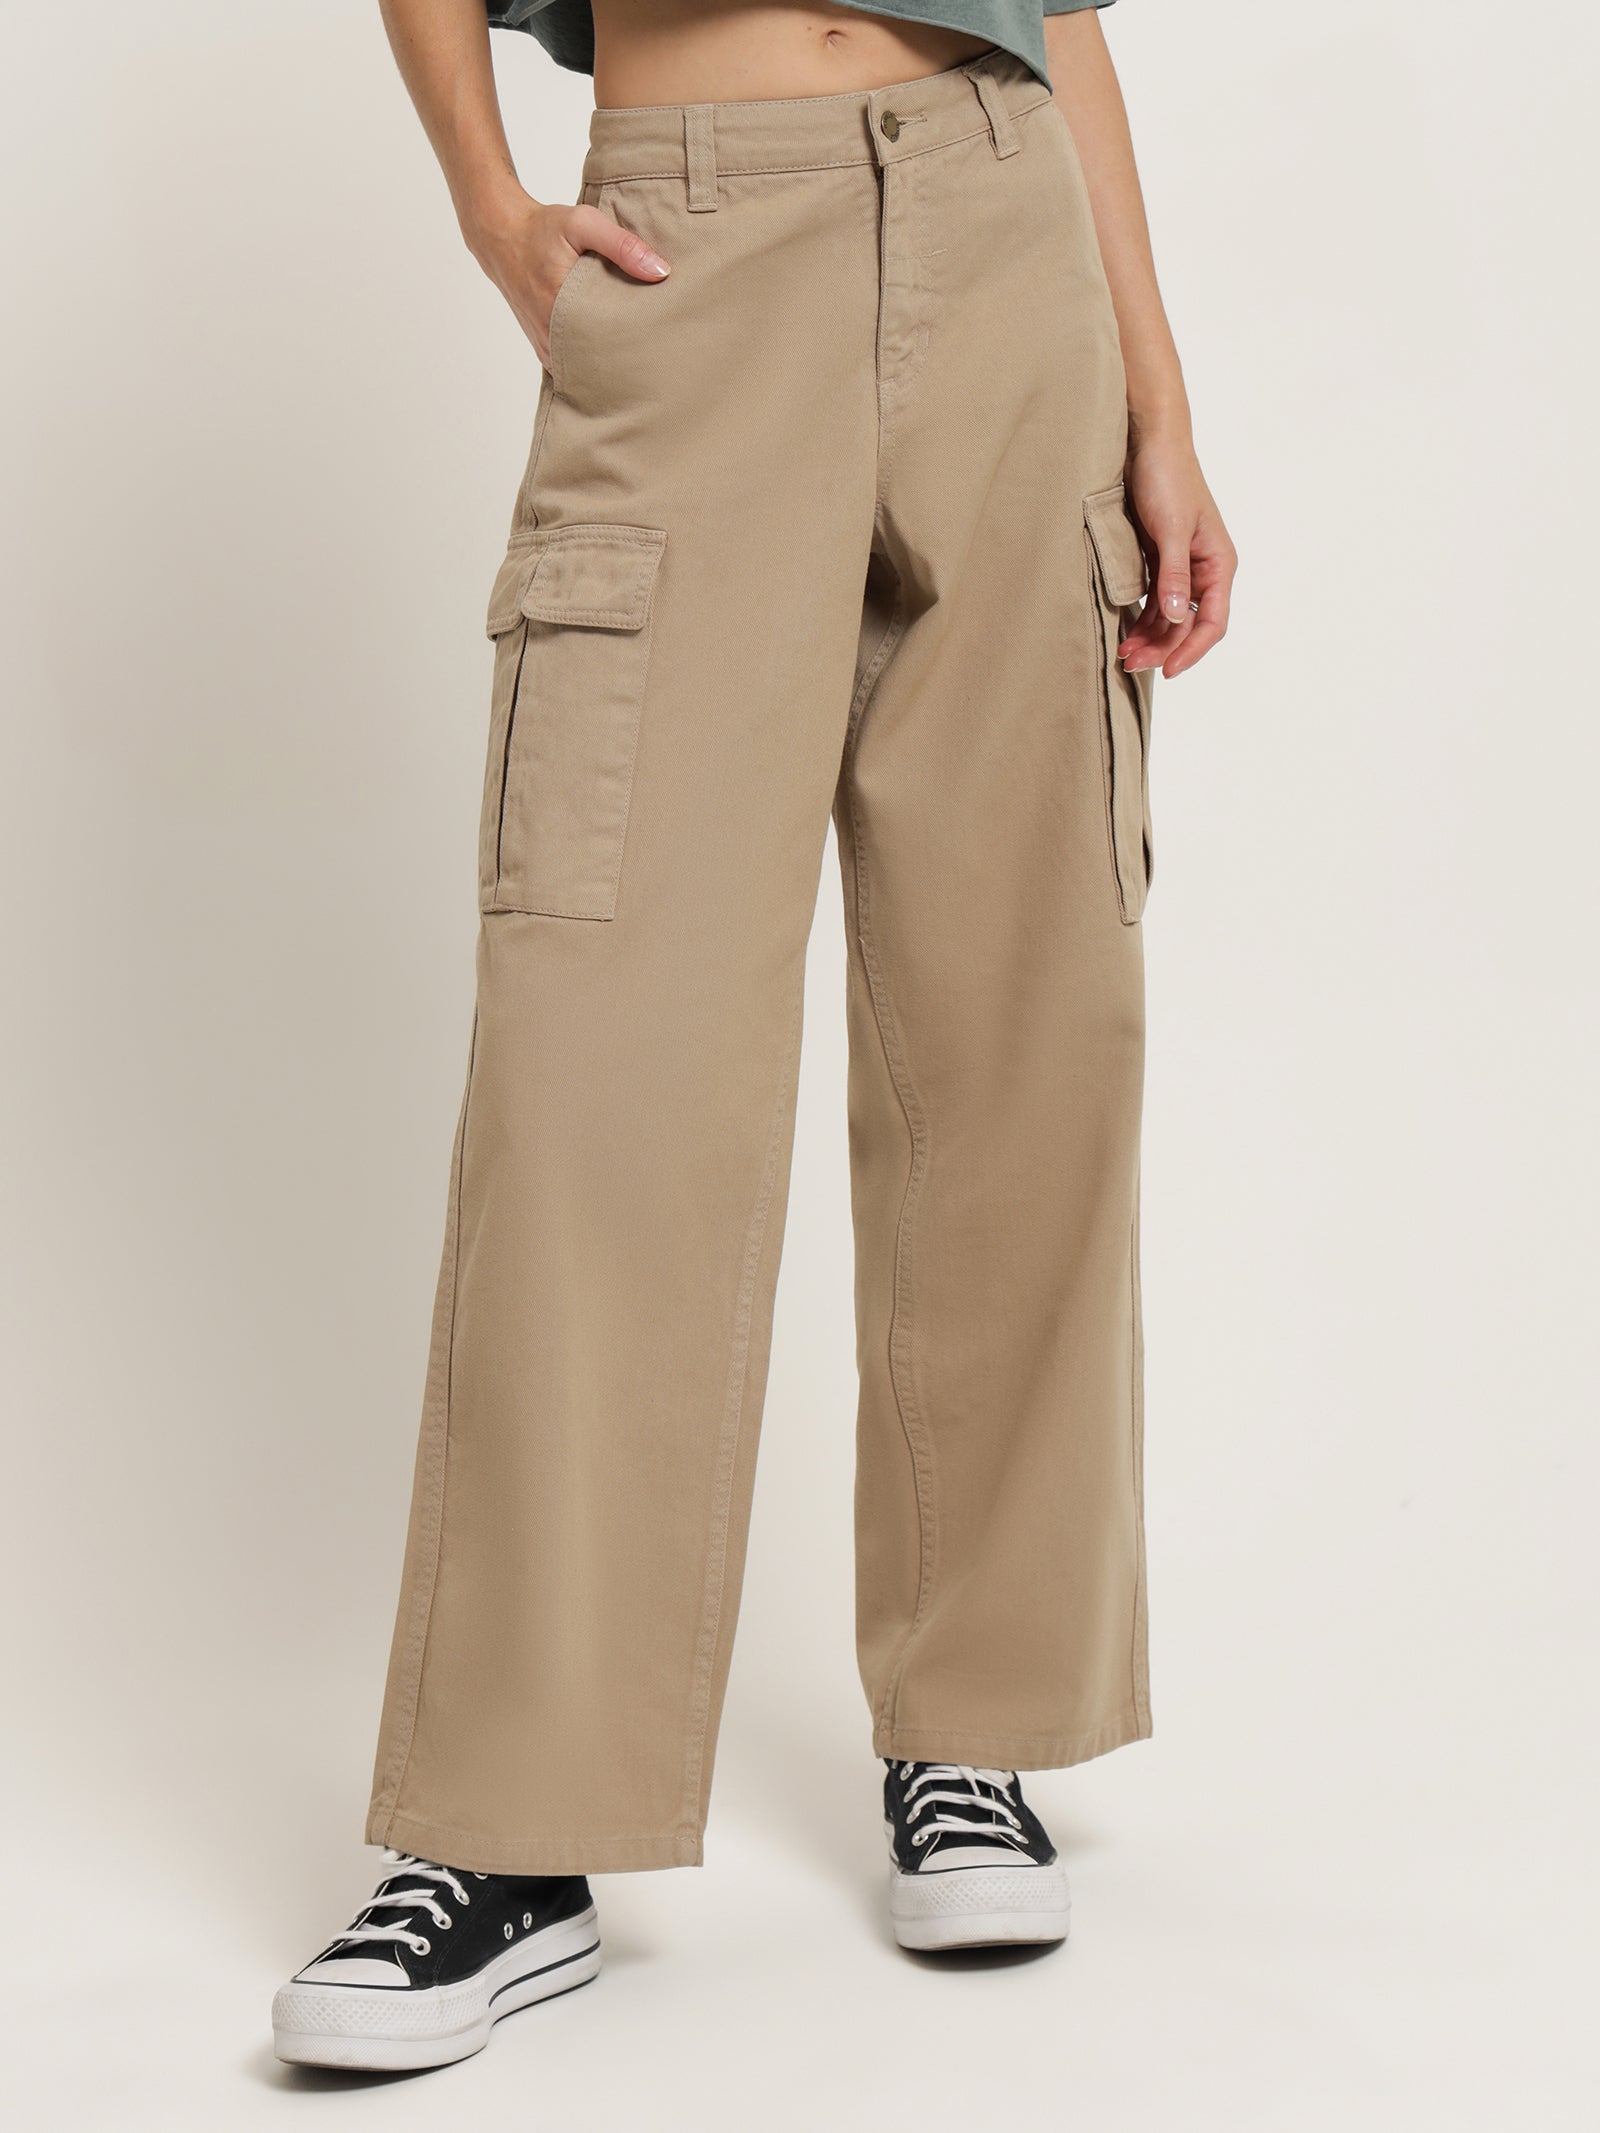 Khaki Trousers For Women  Buy Khaki Trousers For Women online in India